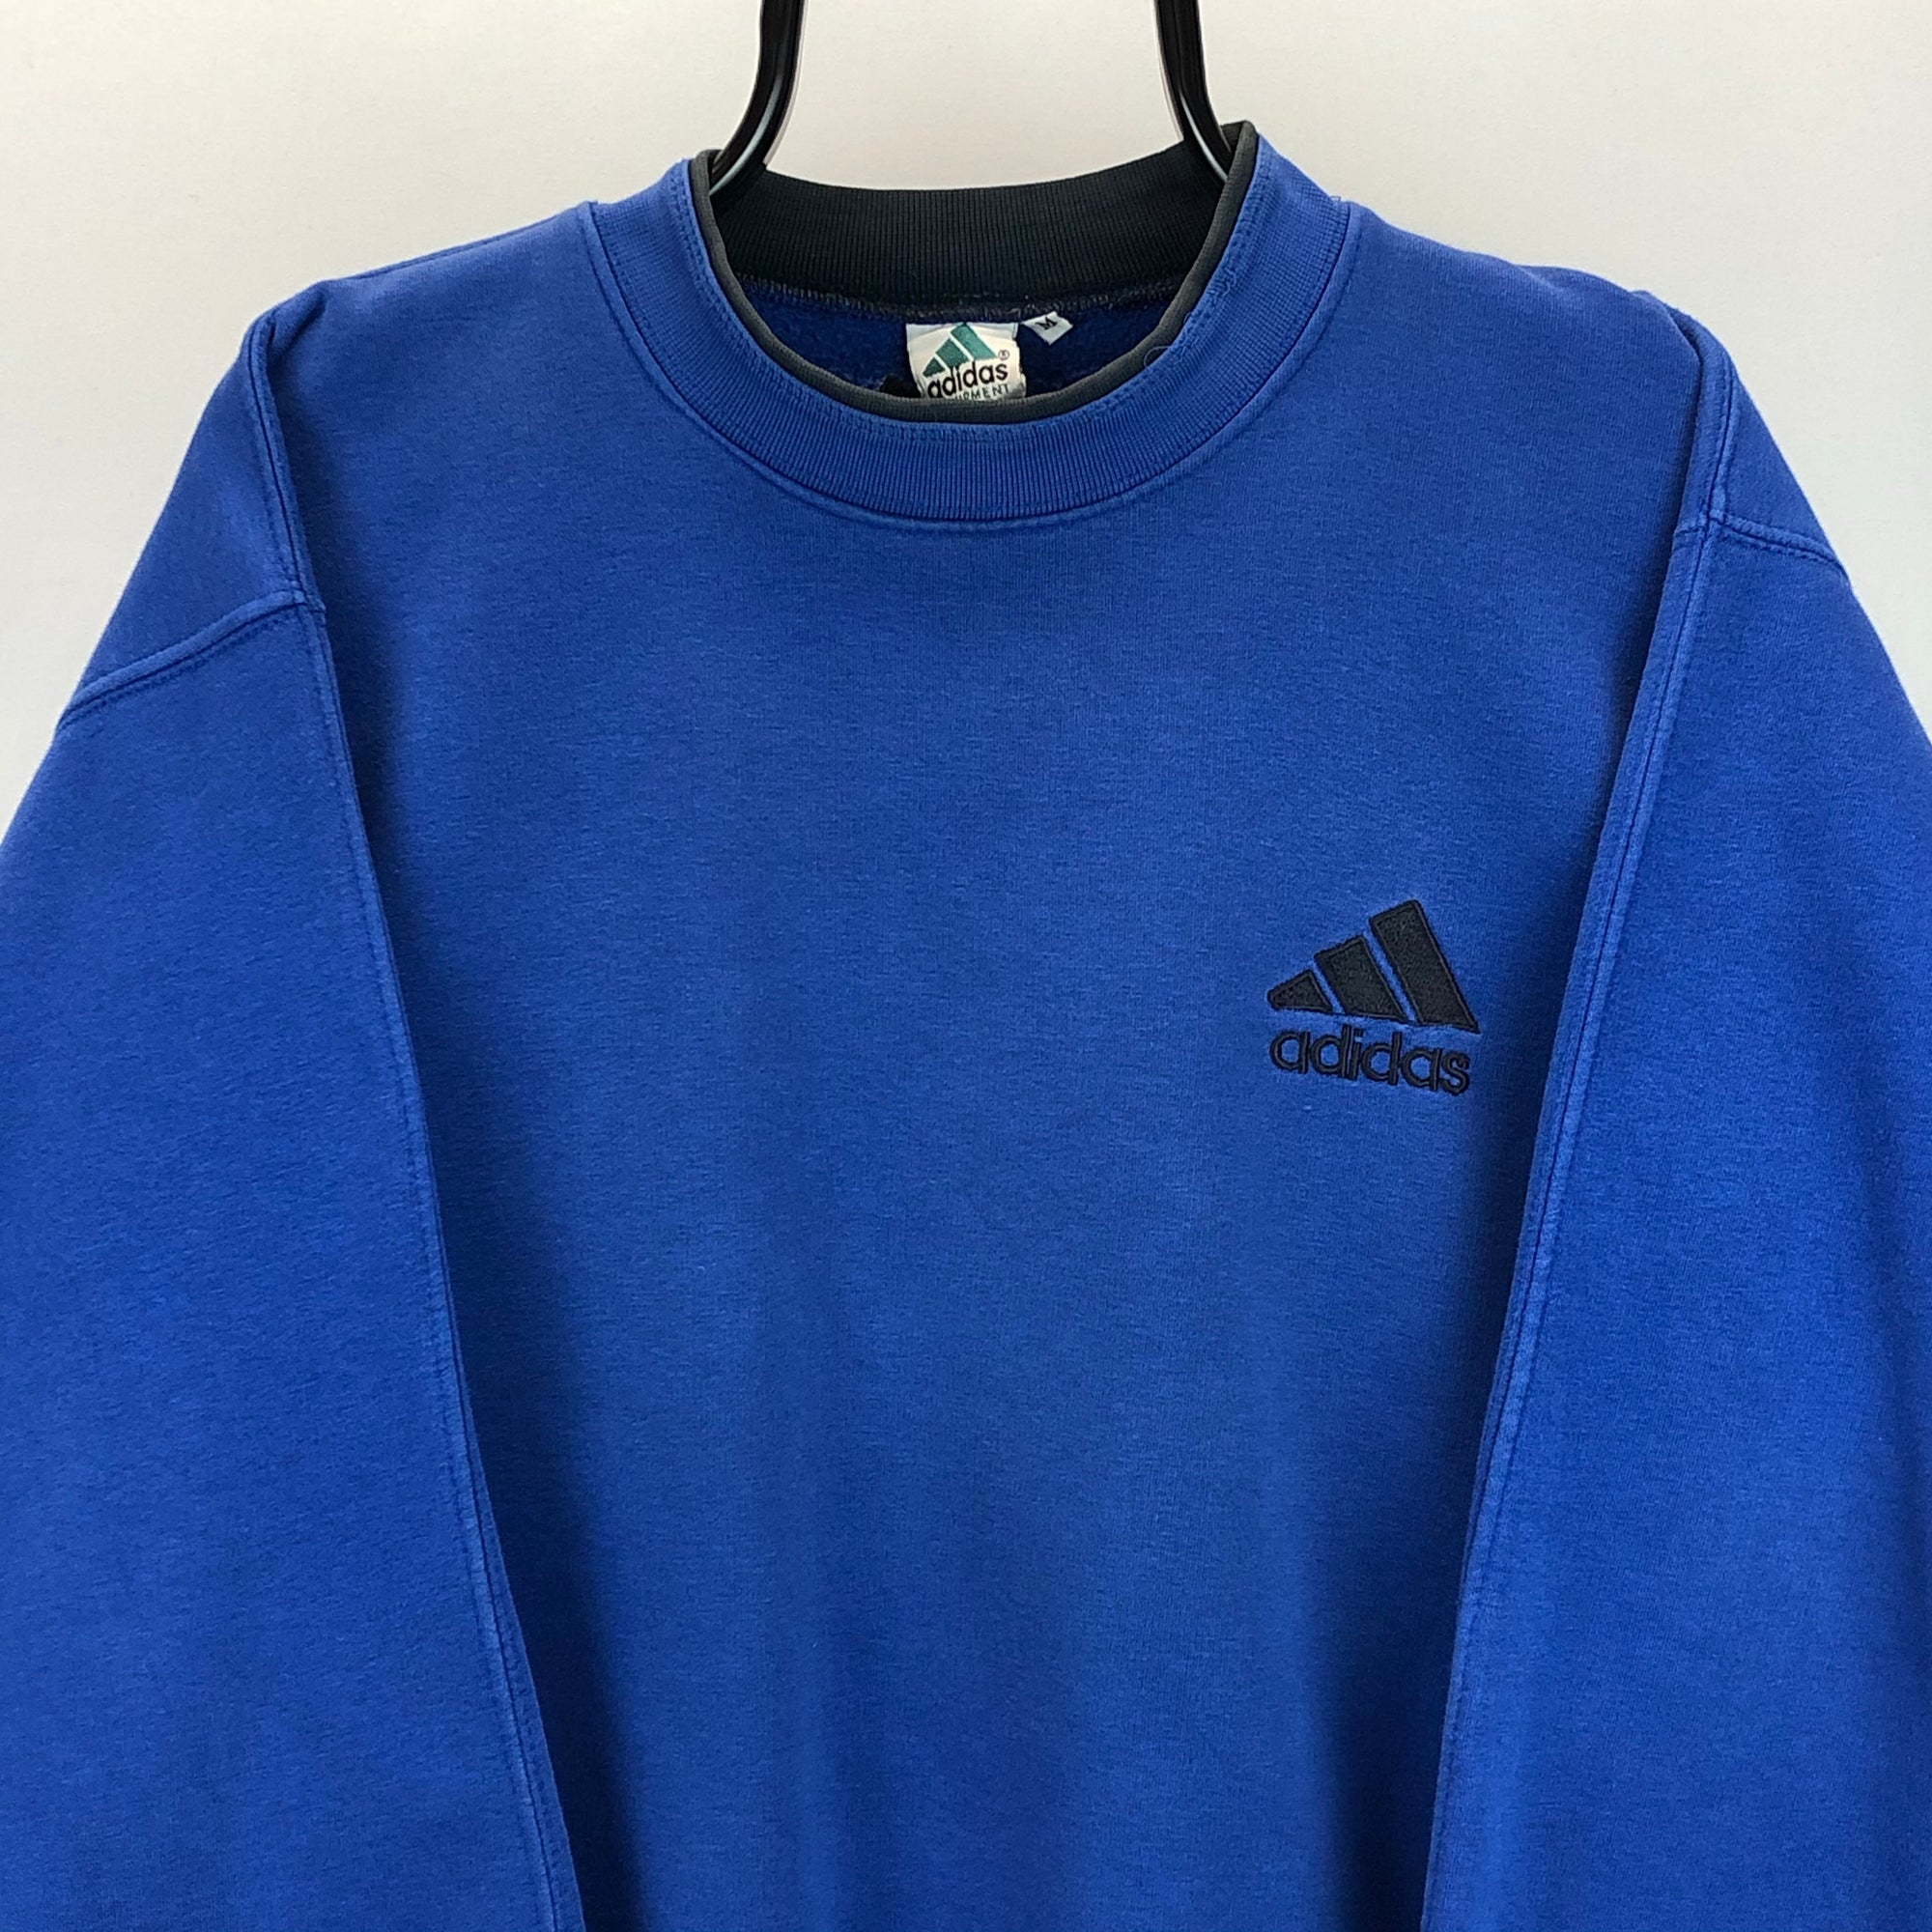 Vintage 90s Adidas Embroidered Small Logo Sweatshirt in Blue - Men’s Medium/Women’s Large